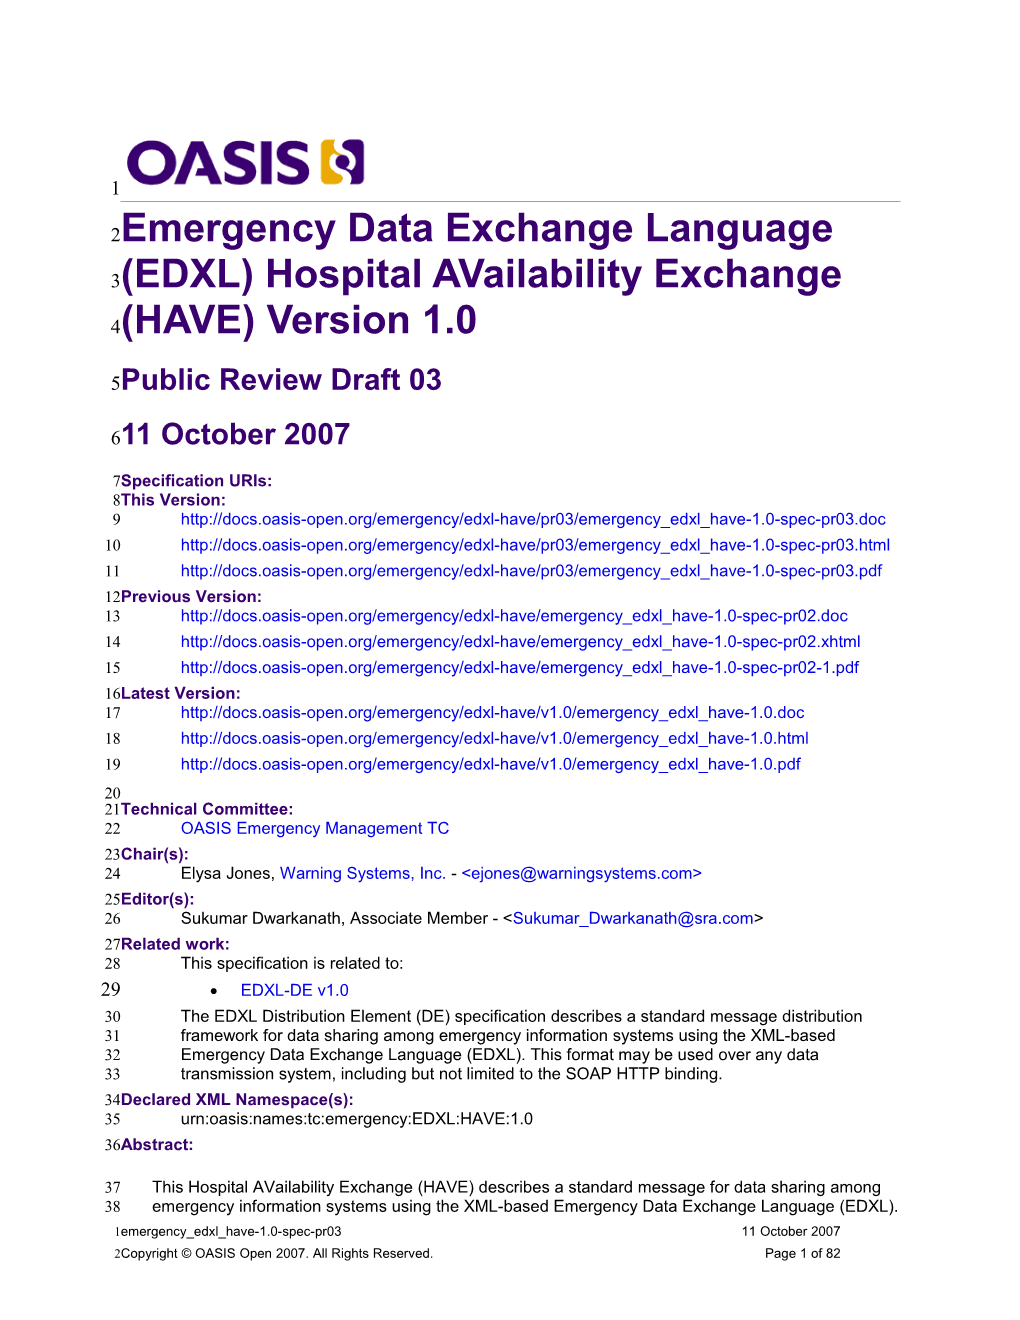 Emergency Data Exchange Language (EDXL)Hospital Availability Exchange (HAVE) Version 1.0